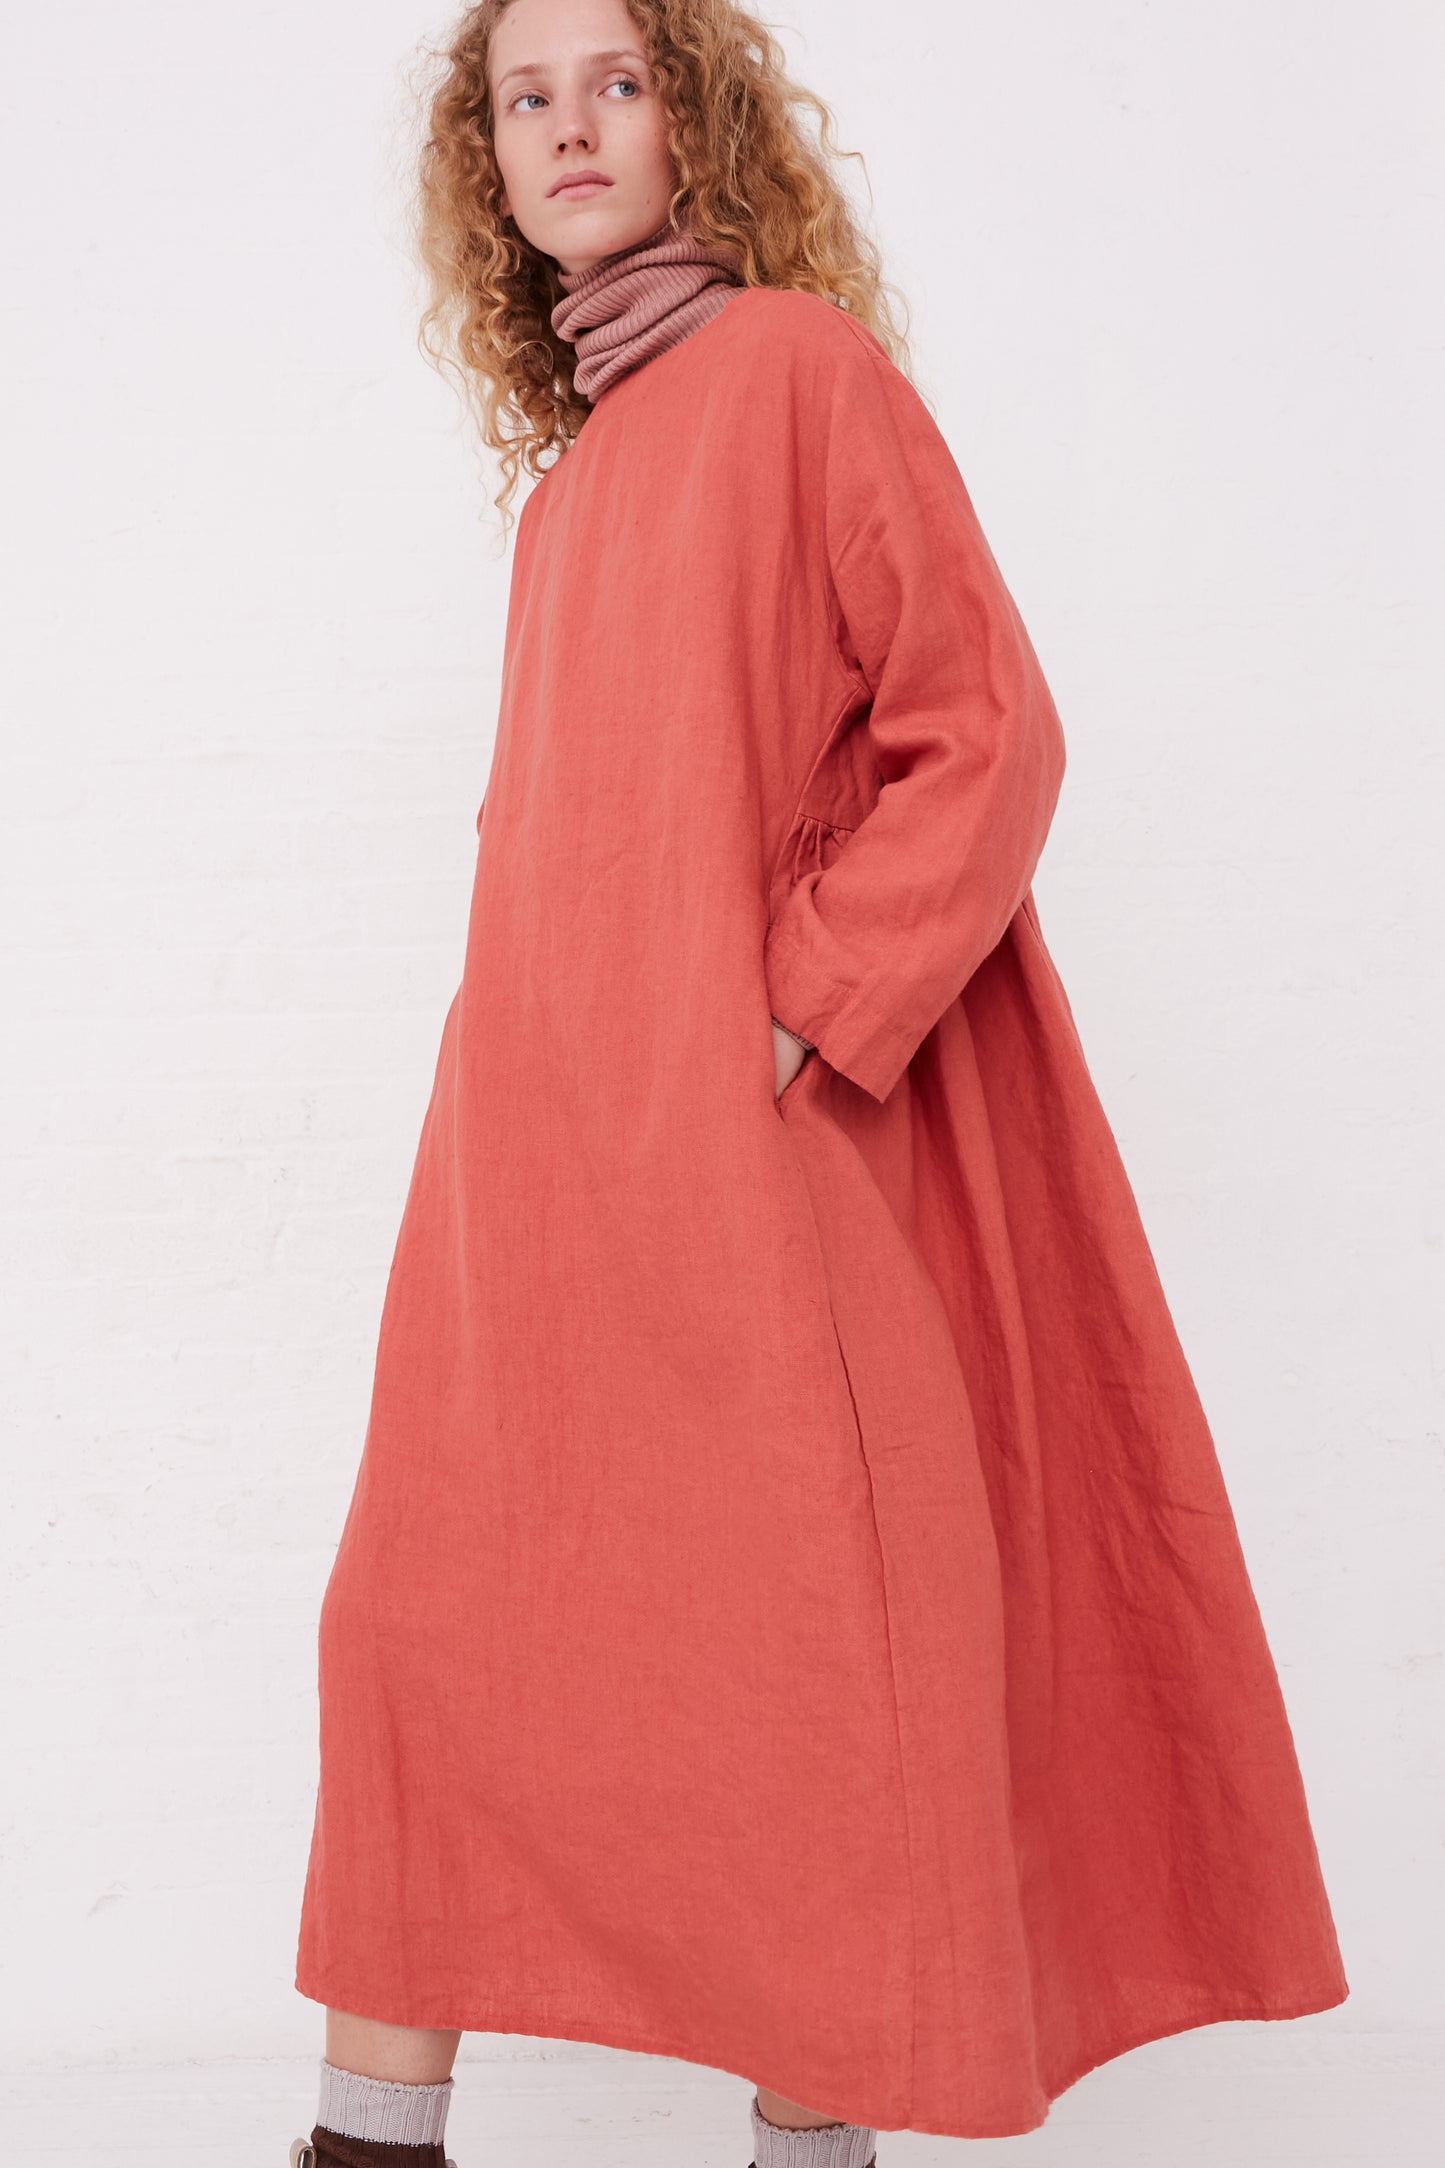 The model is wearing the Kortrijk Linen Dress in Pink by Ichi Antiquités.